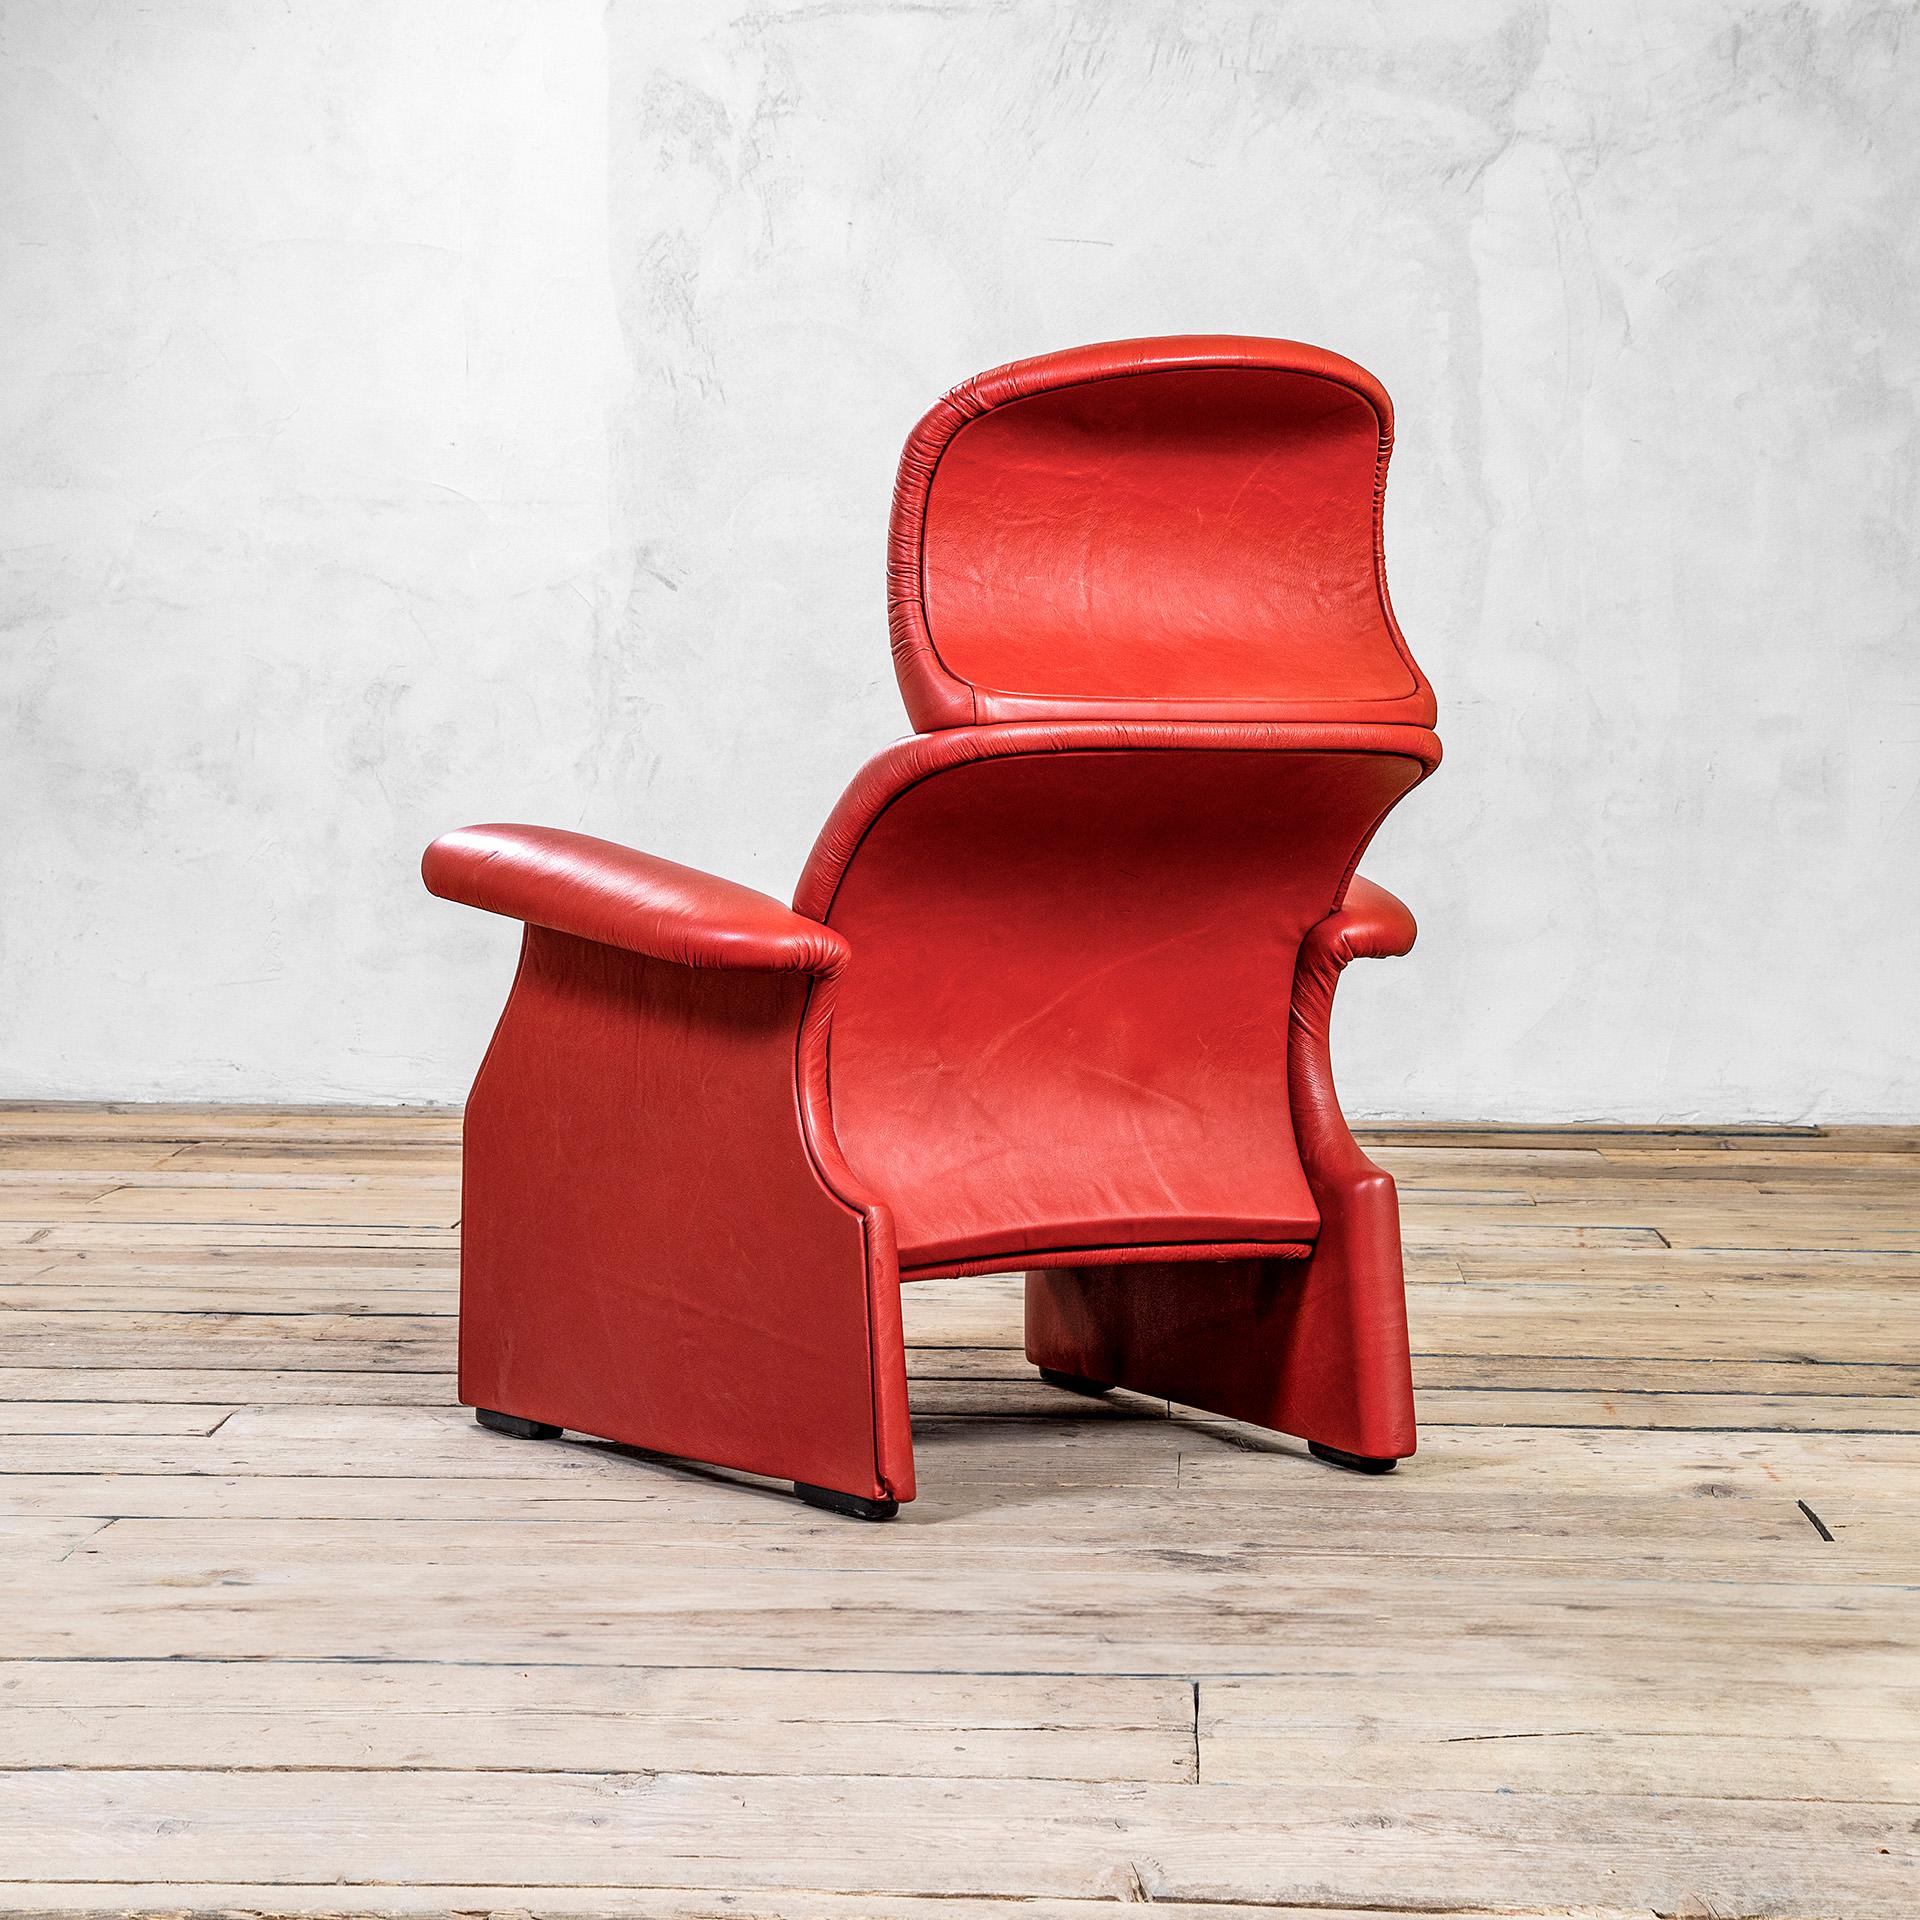 Gavina Studio Sessel-Paar des 20. Jahrhunderts mod. Viscontea Rotes Leder, 1980er Jahre, Paar (Italienisch) im Angebot